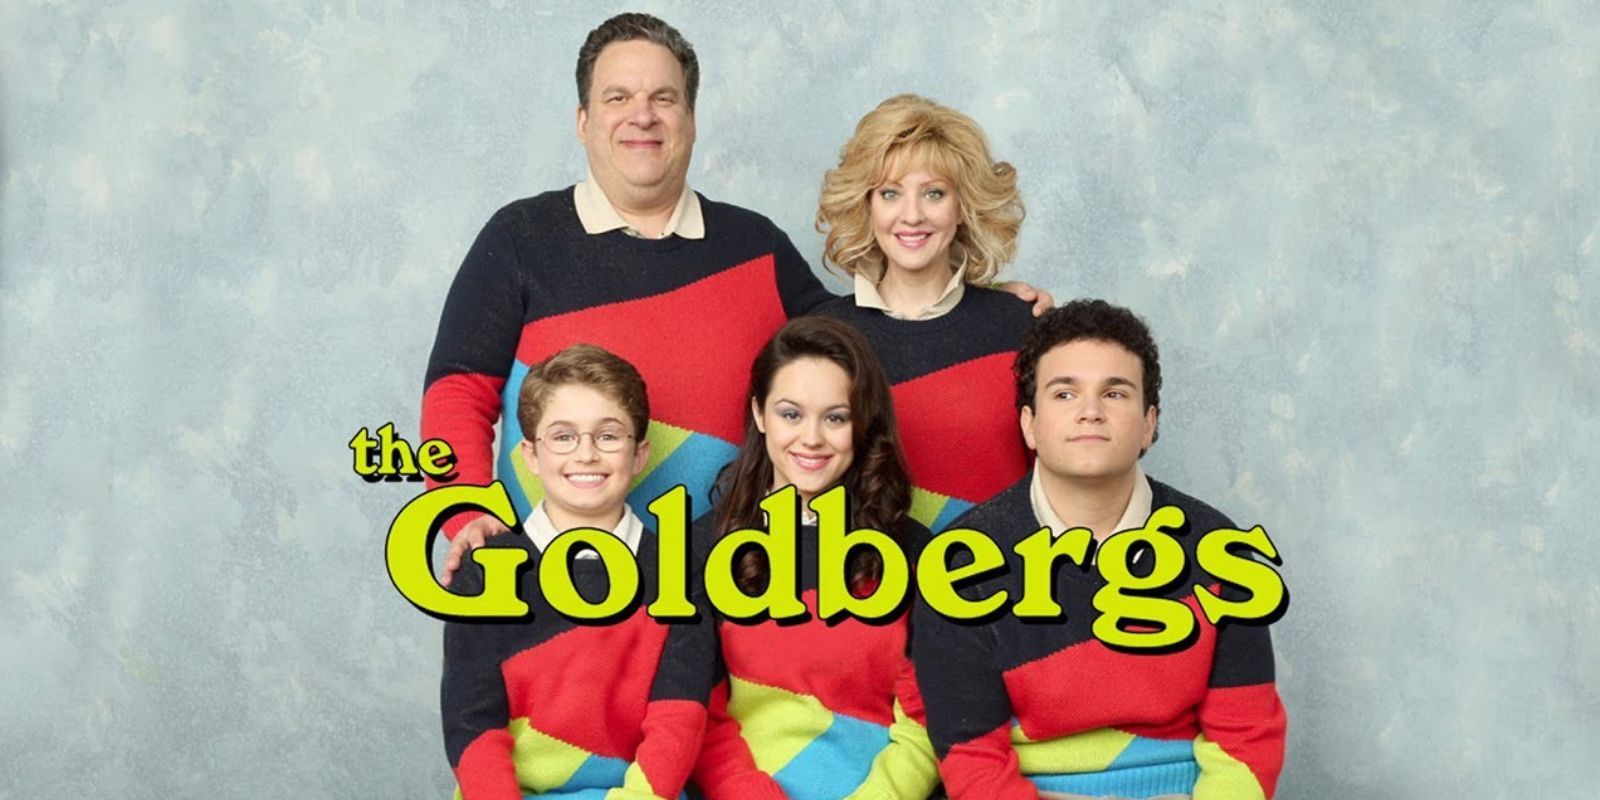 The Goldbergs family photo